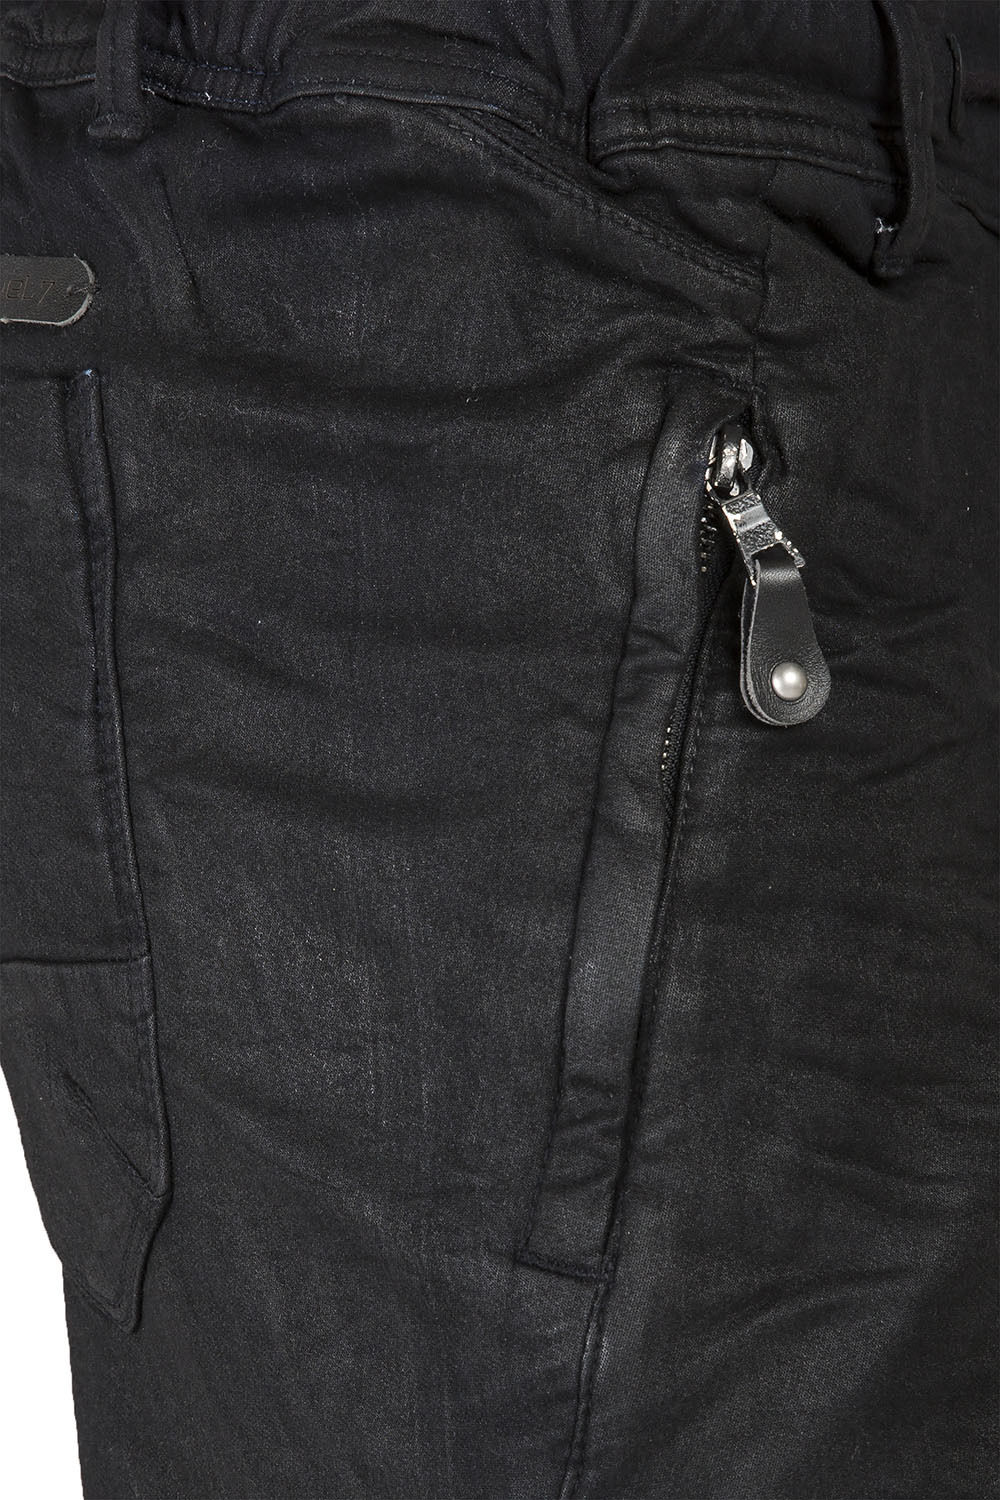 Level 7 Dark Indigo Premium Coated 3D Whiskering Wash 5 Pkt Knit Denim Jeans  – Level 7 Jeans